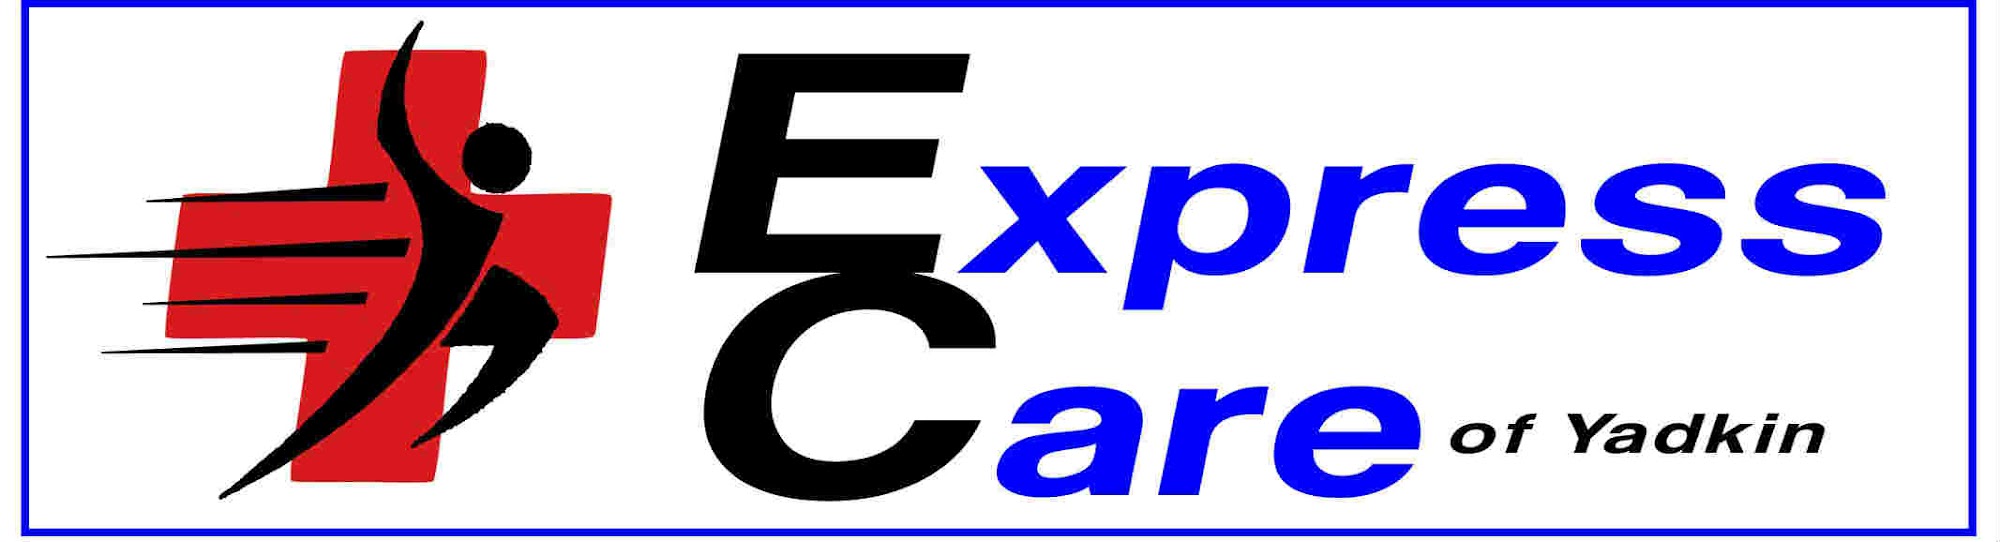 Express Care Of Yadkin Urgent Care 755 S State St, Yadkinville North Carolina 27055